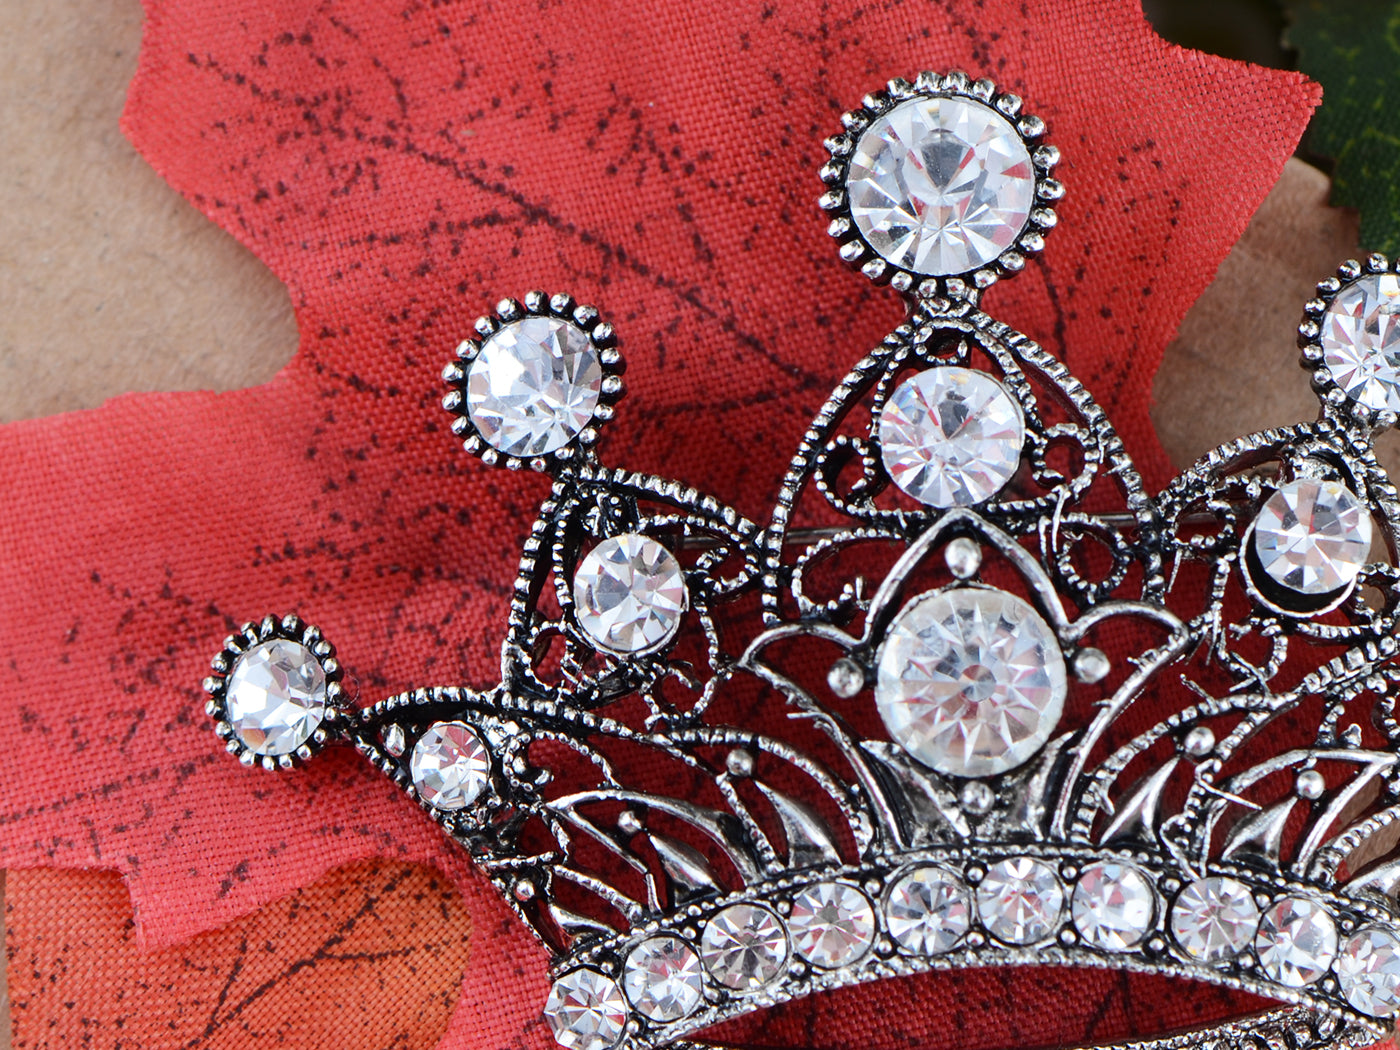 Antique Shine Smoker Topaz Princess Queen King Crown Brooch Pin Pendent